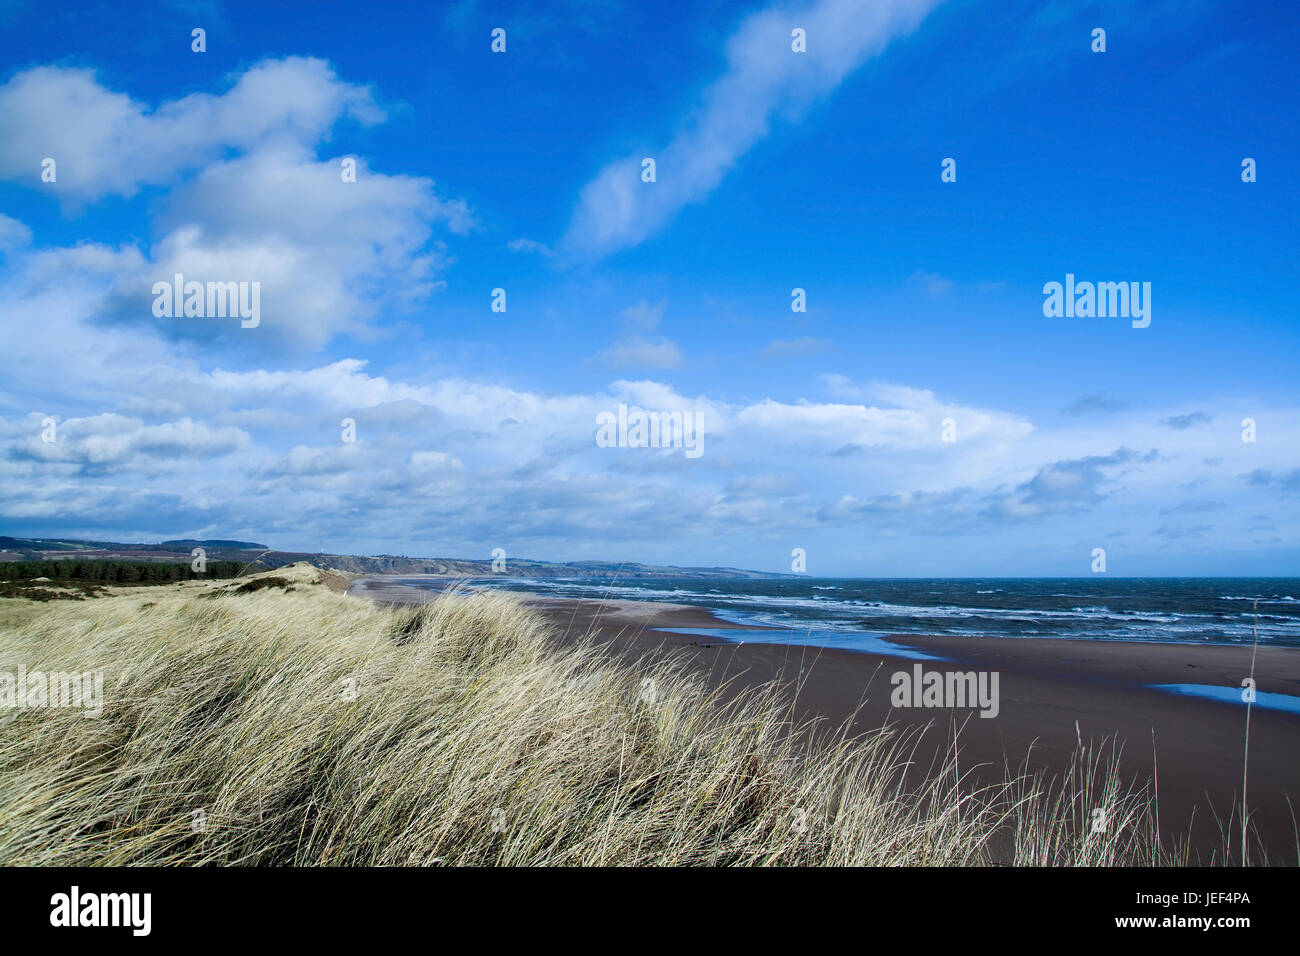 Costa est della Scozia, Inghilterra, accettato in febbraio a ventoso., Ostküste Schottlands, aufgenommen in Februar bei windigem Wetter. Foto Stock